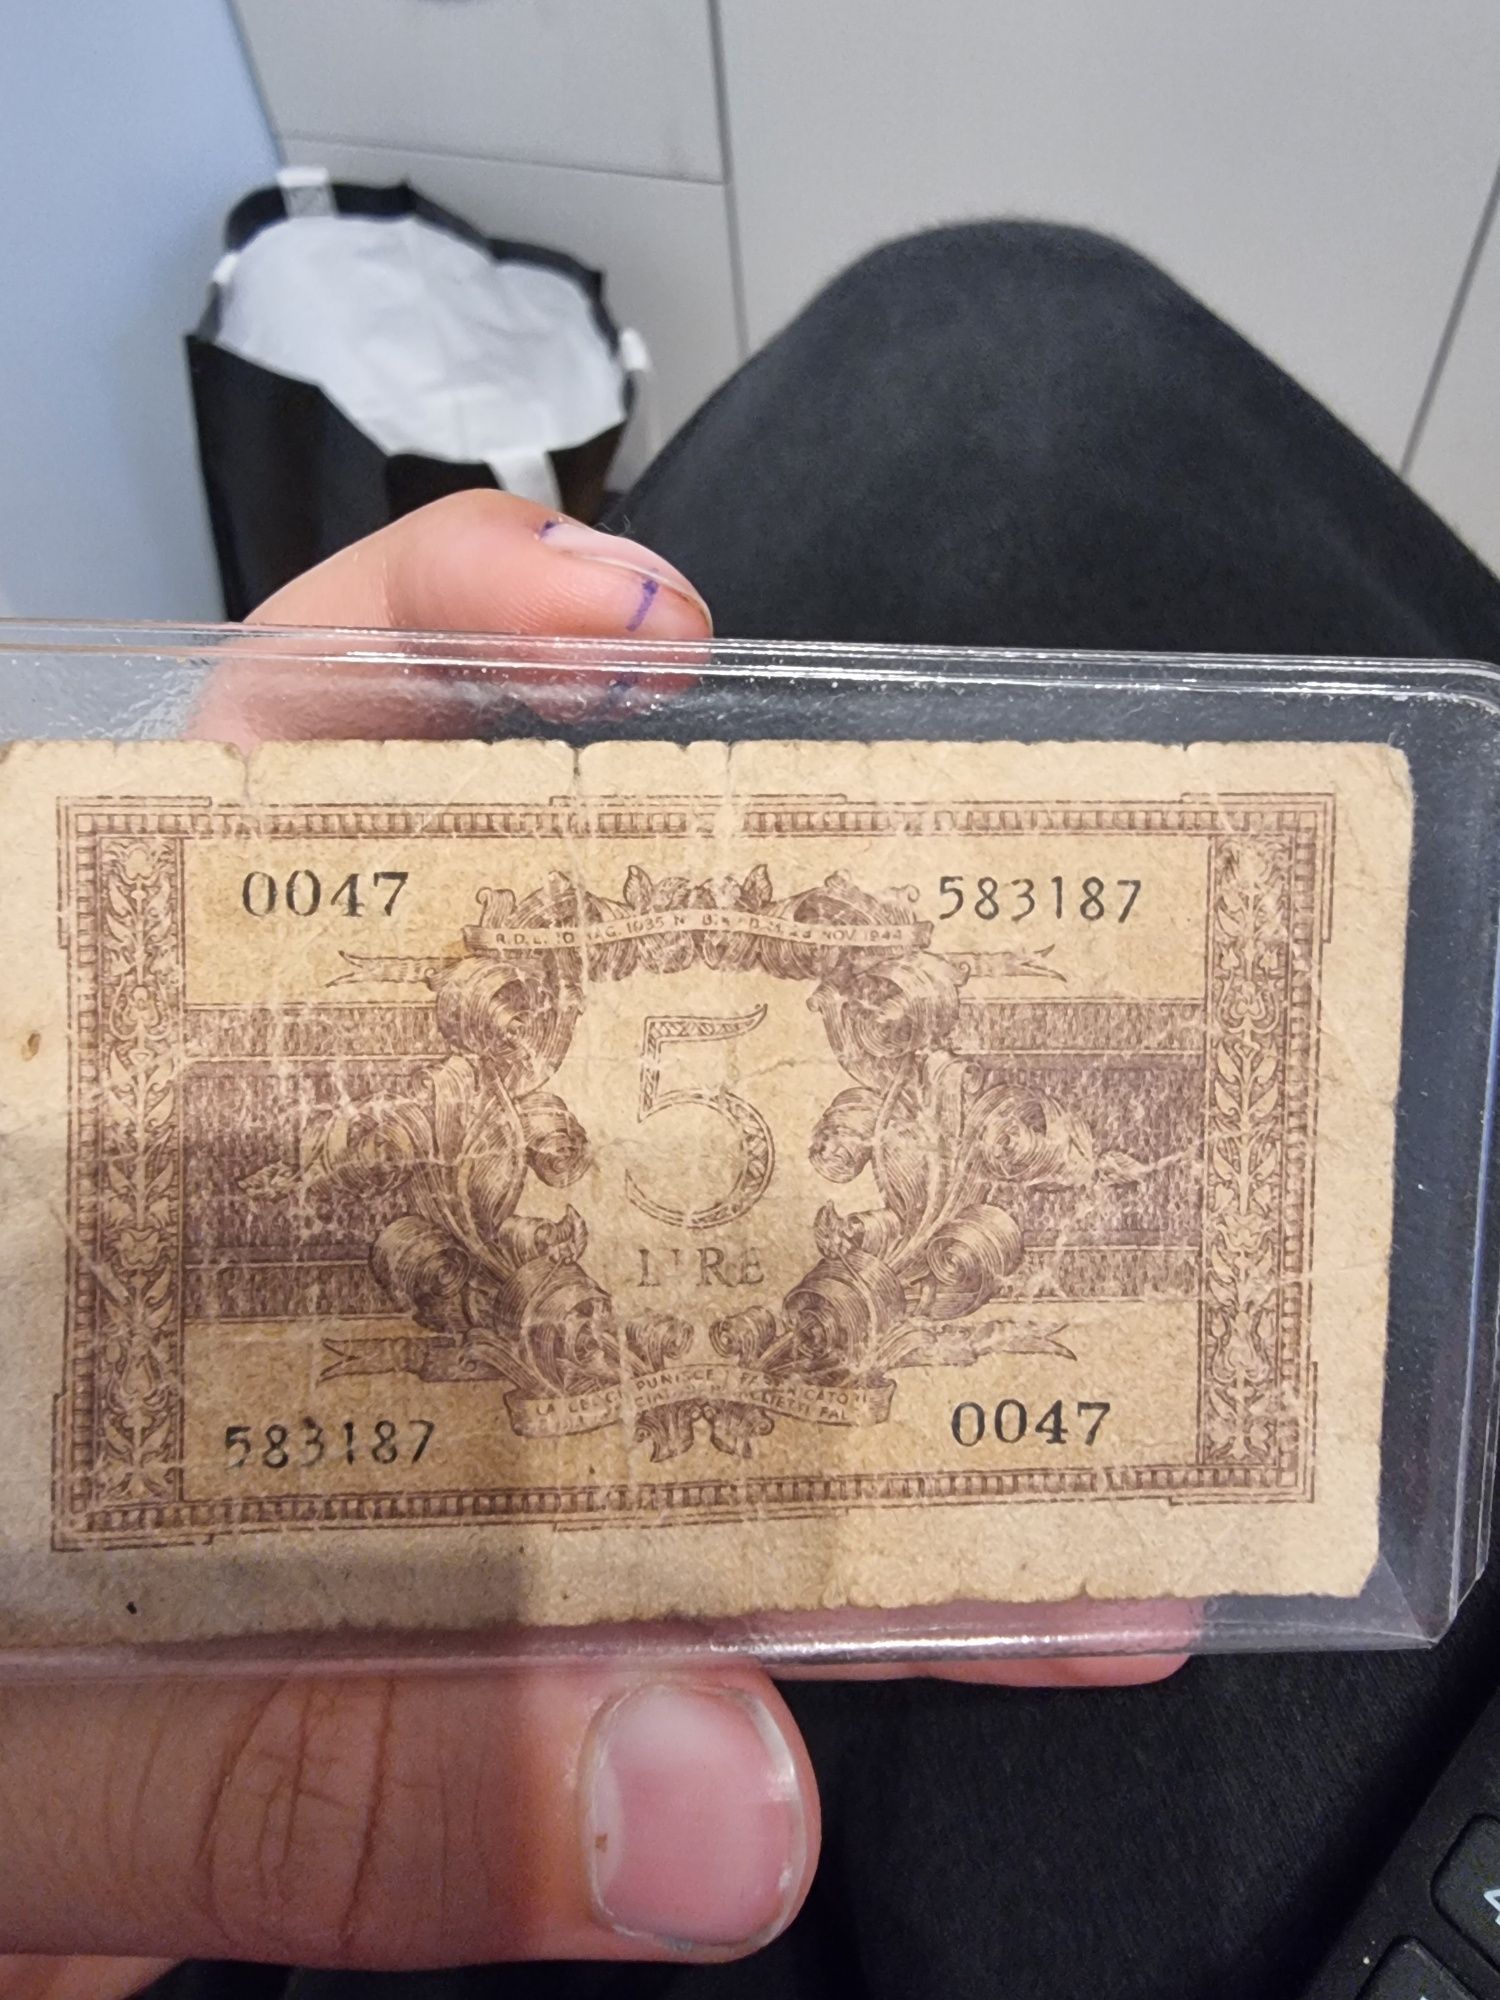 Stary banknot 5 lire 1944rok